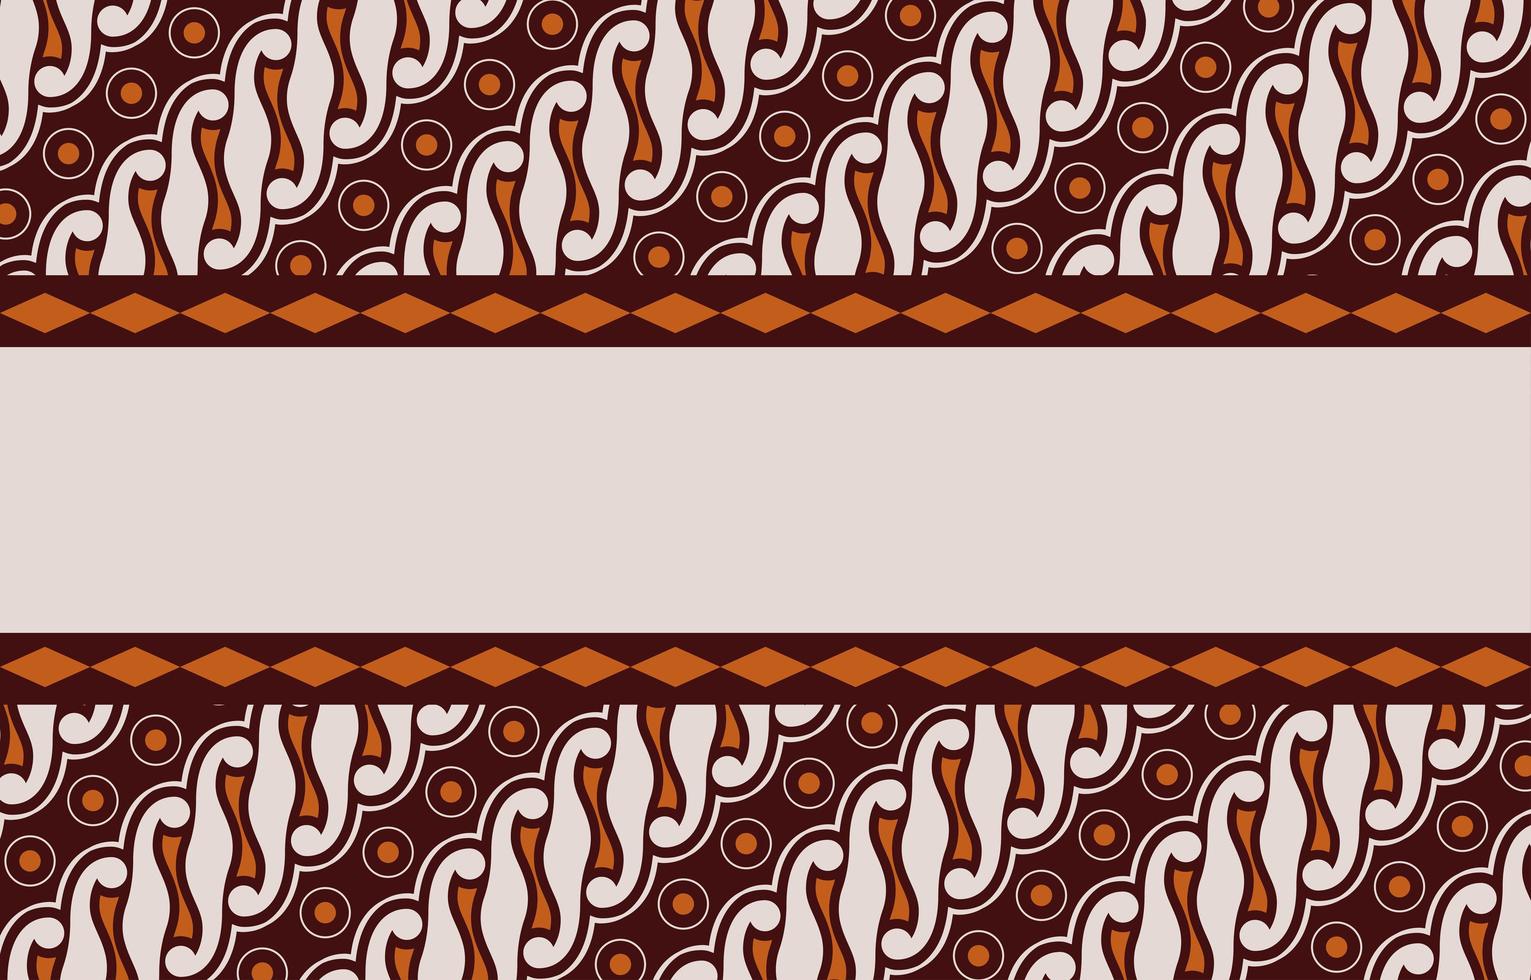 Batik-Hintergrundvorlage vektor